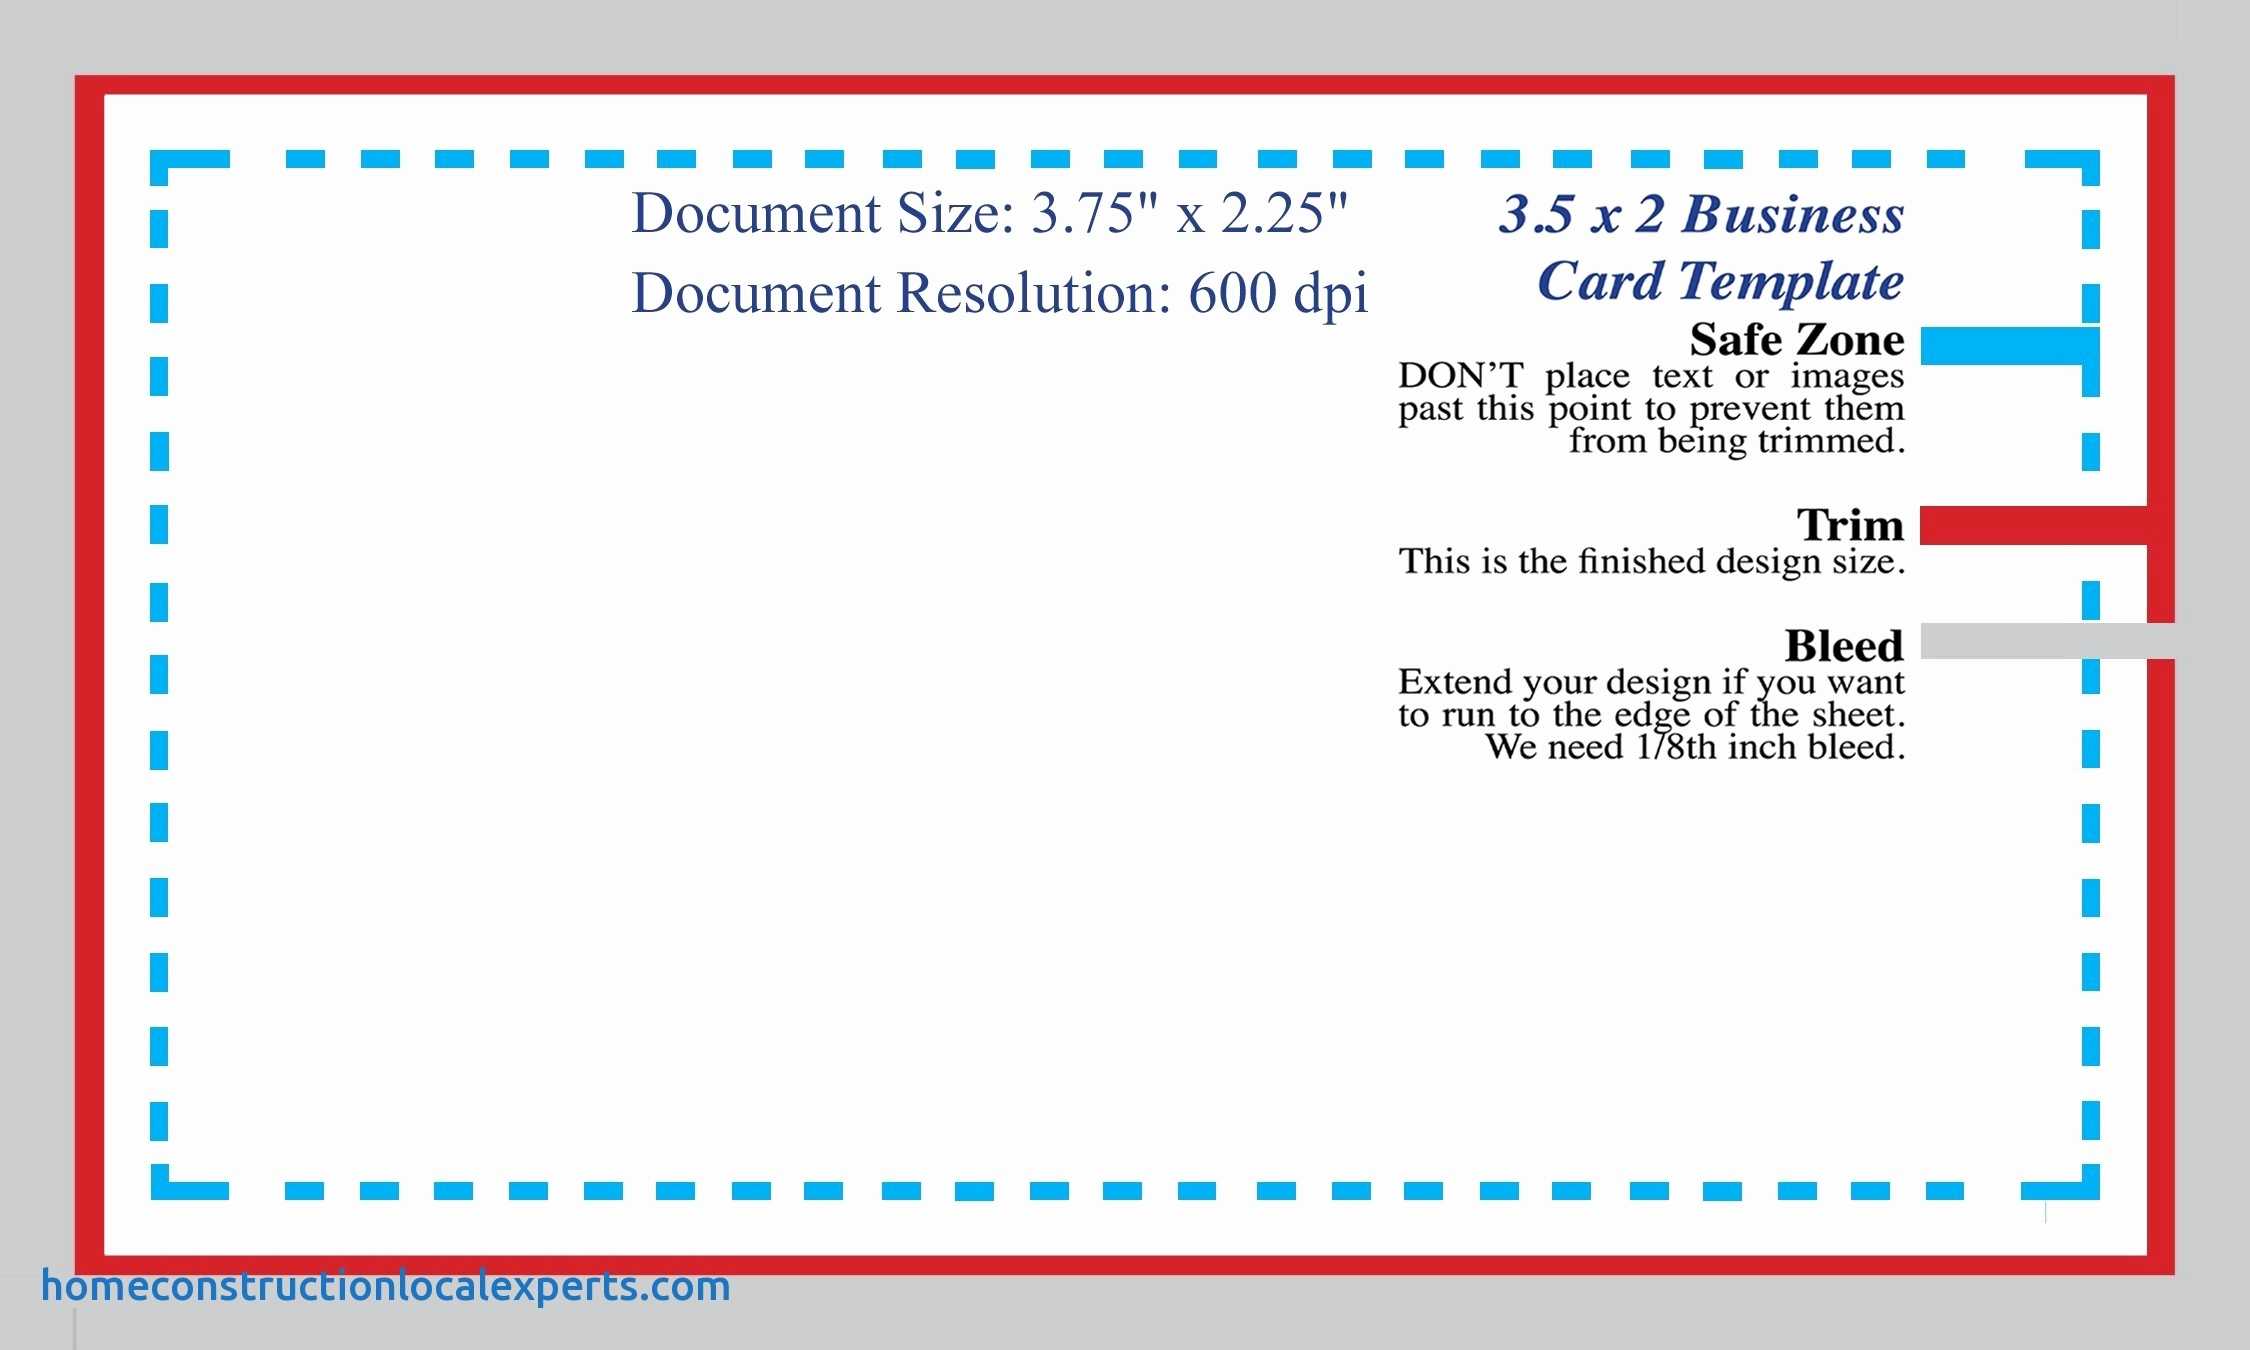 Business Card Font Size Letters Photoshop Minimum Guide In Business Card Template Size Photoshop